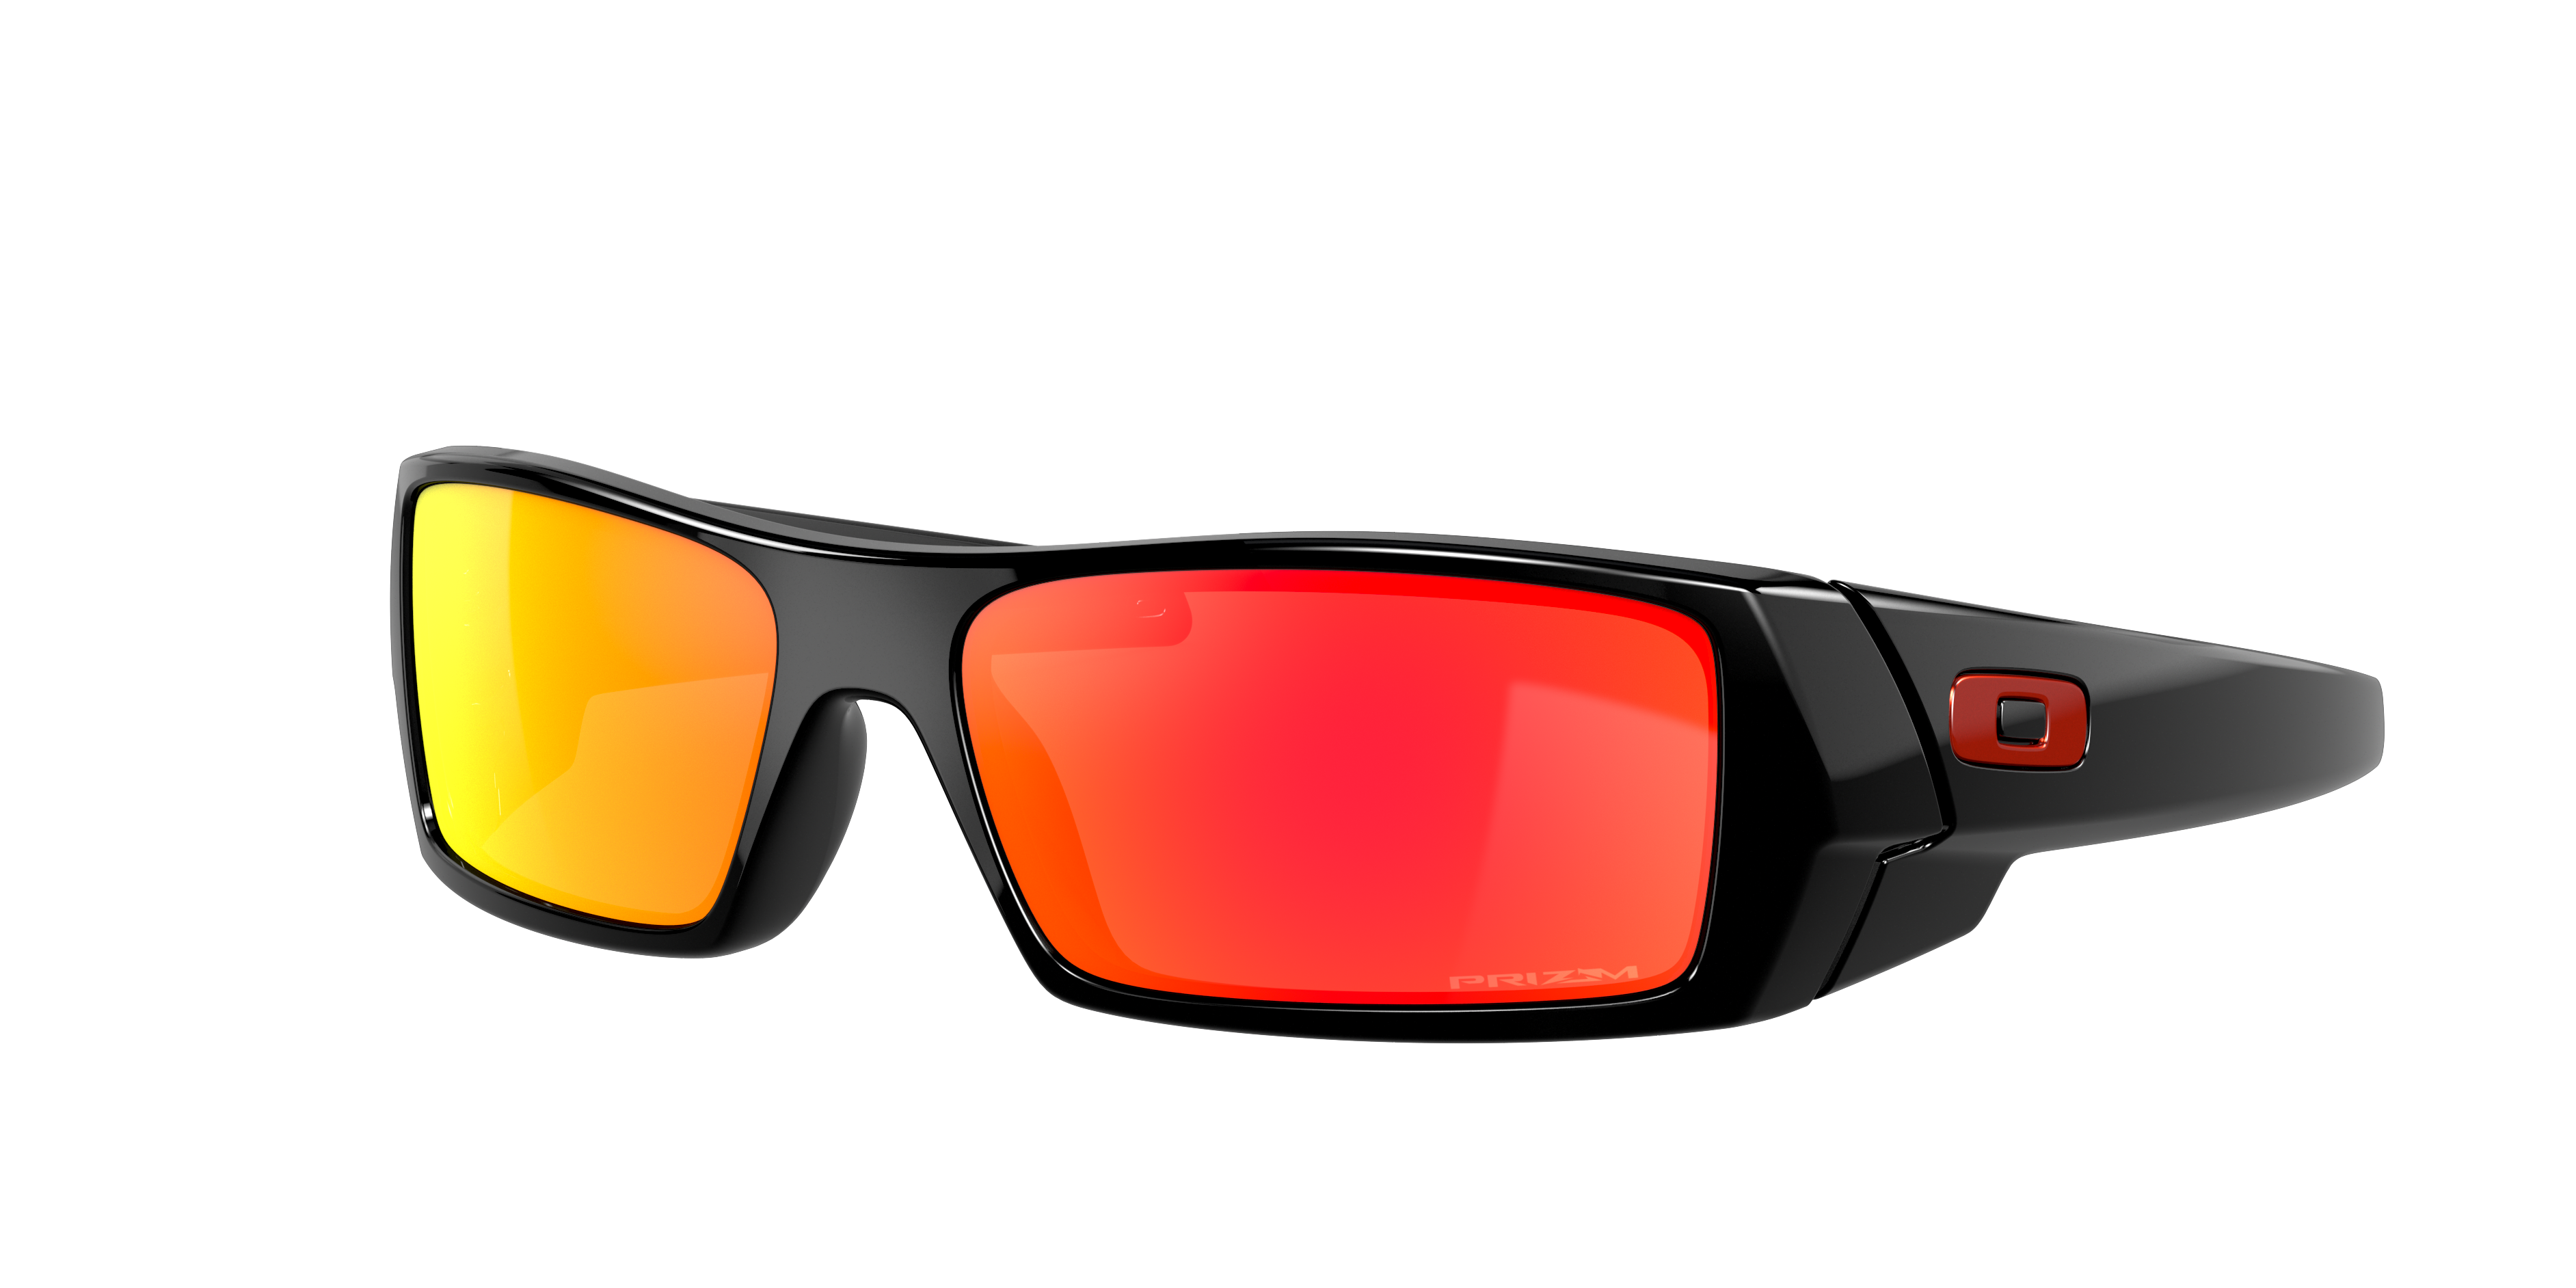 OAKLEY POLARIZED Sunglasses GASCAN OO 12-856 Matte Black Frames w/ Black  Iridium | eBay